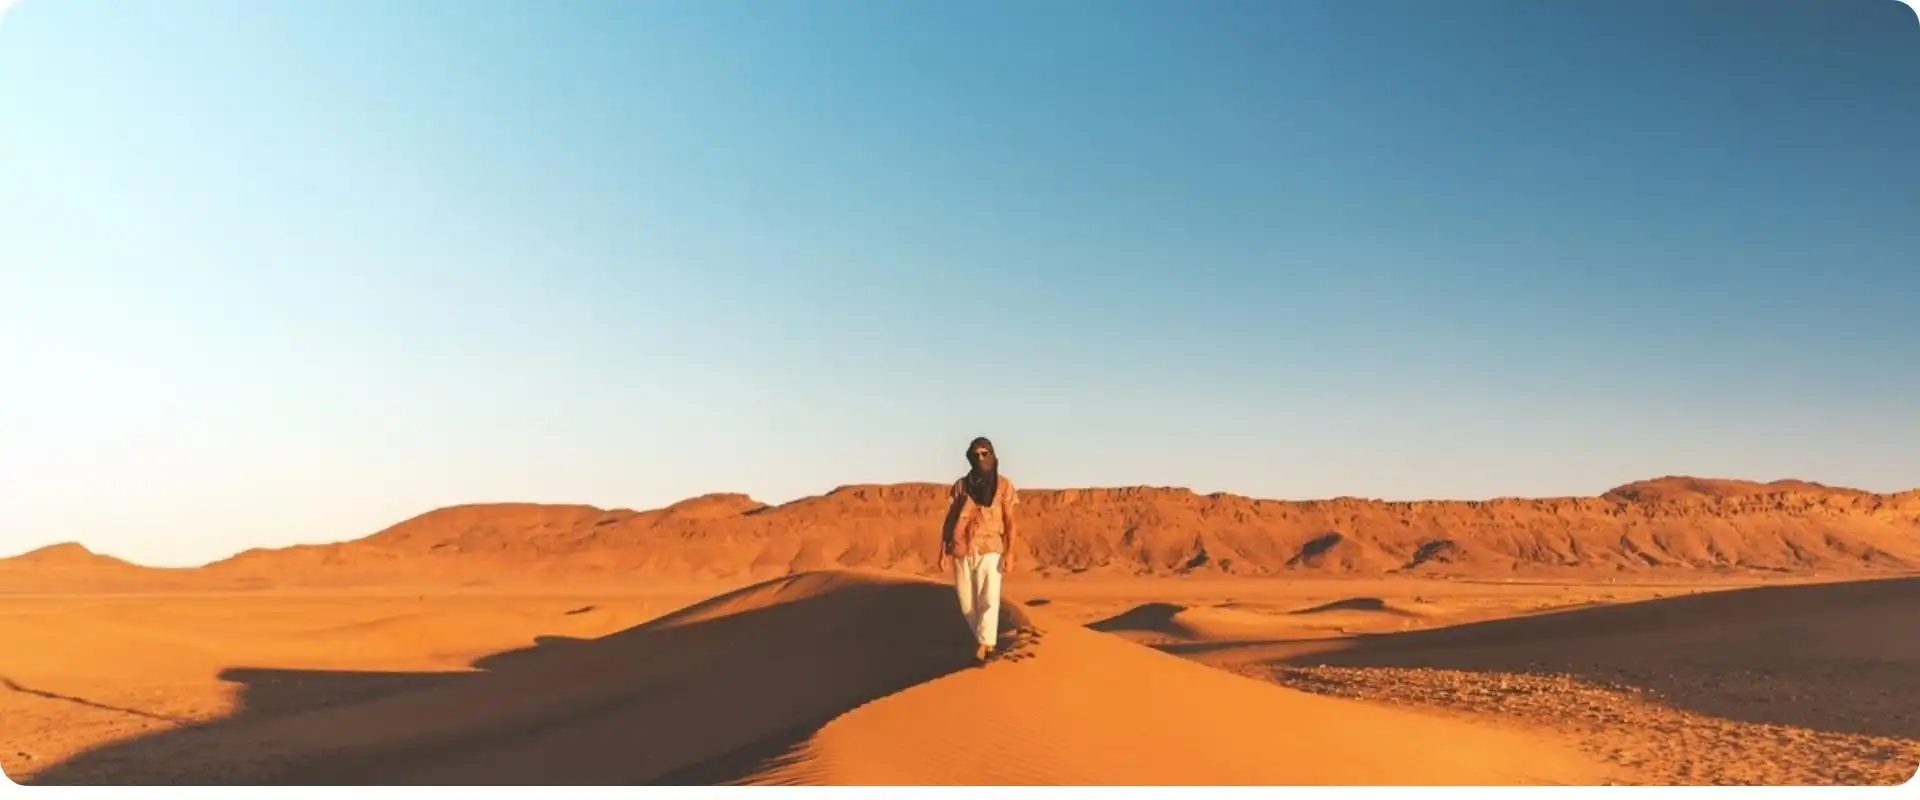 Ørken i Marokko charterrejse fra hamborg.webp